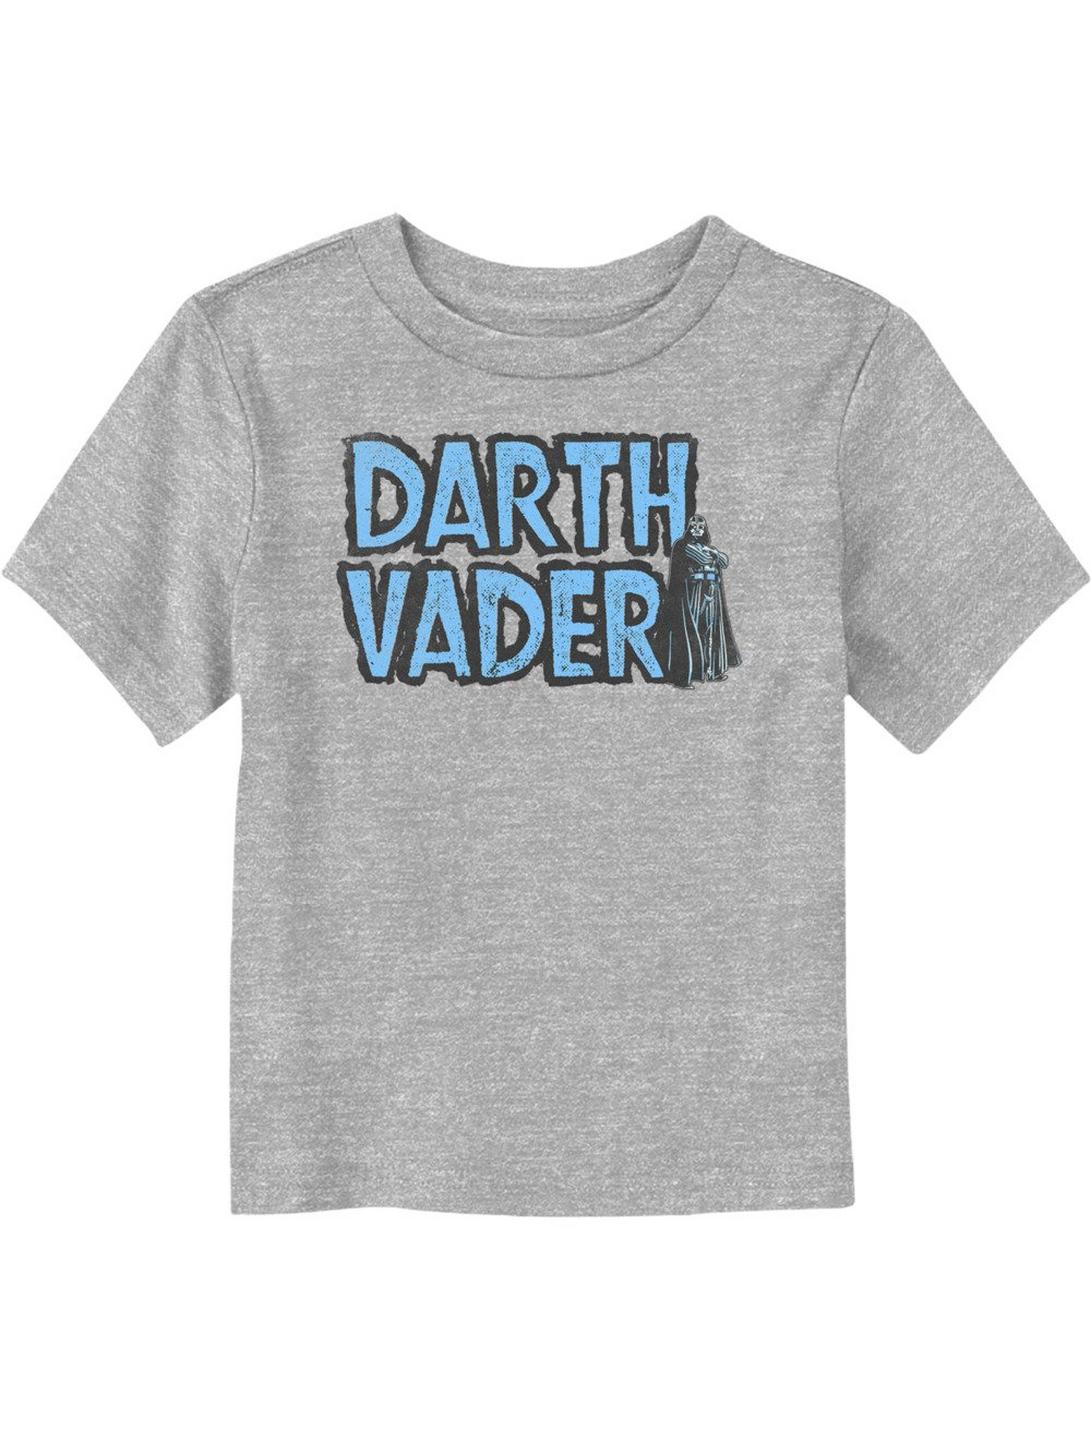 Star Wars Darth Vader Toddler T-Shirt, ATH HTR, hi-res